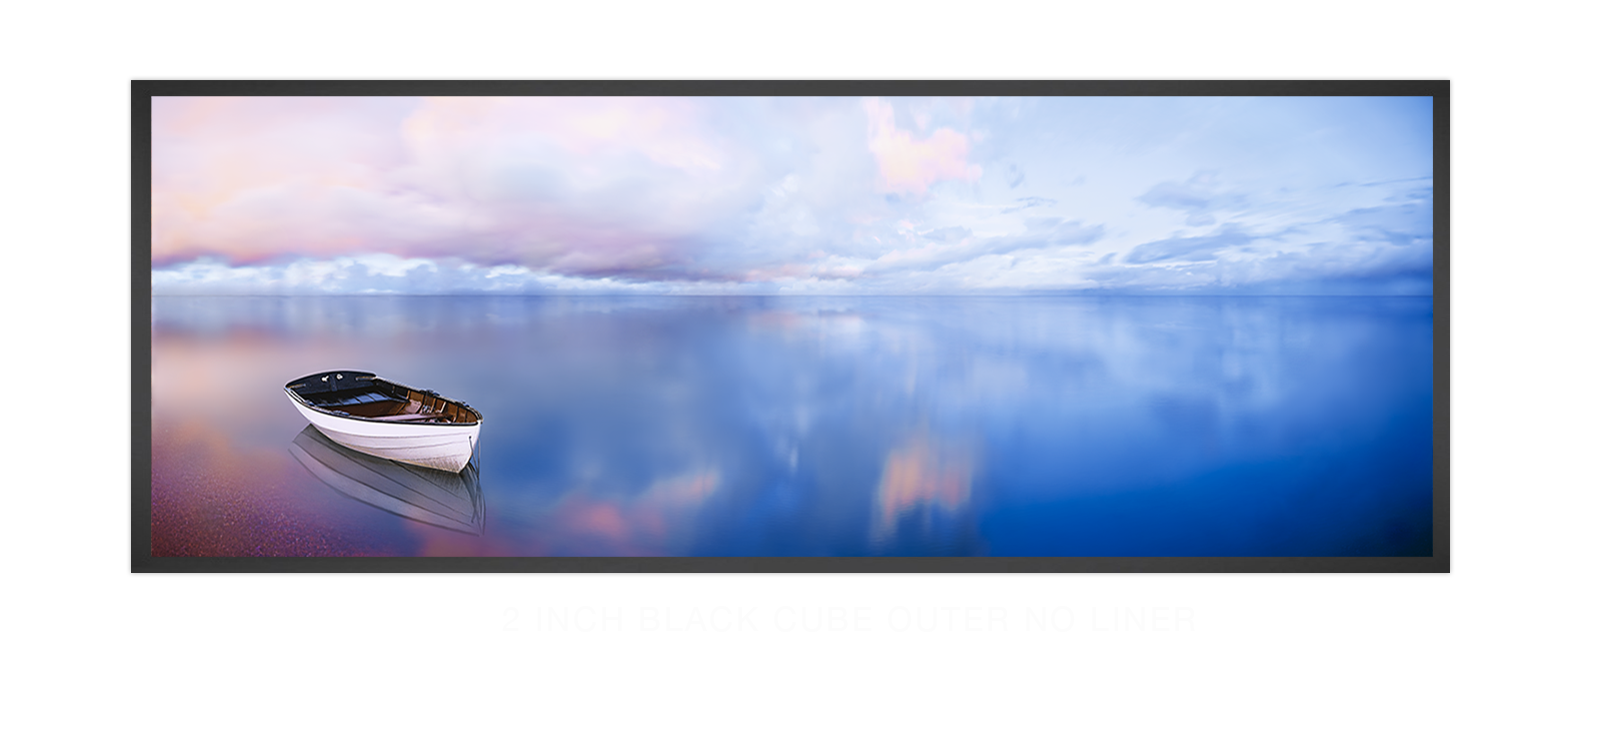 10BLUELAKEBOAT 2 Inch Black Cube Outer w_No Liner T